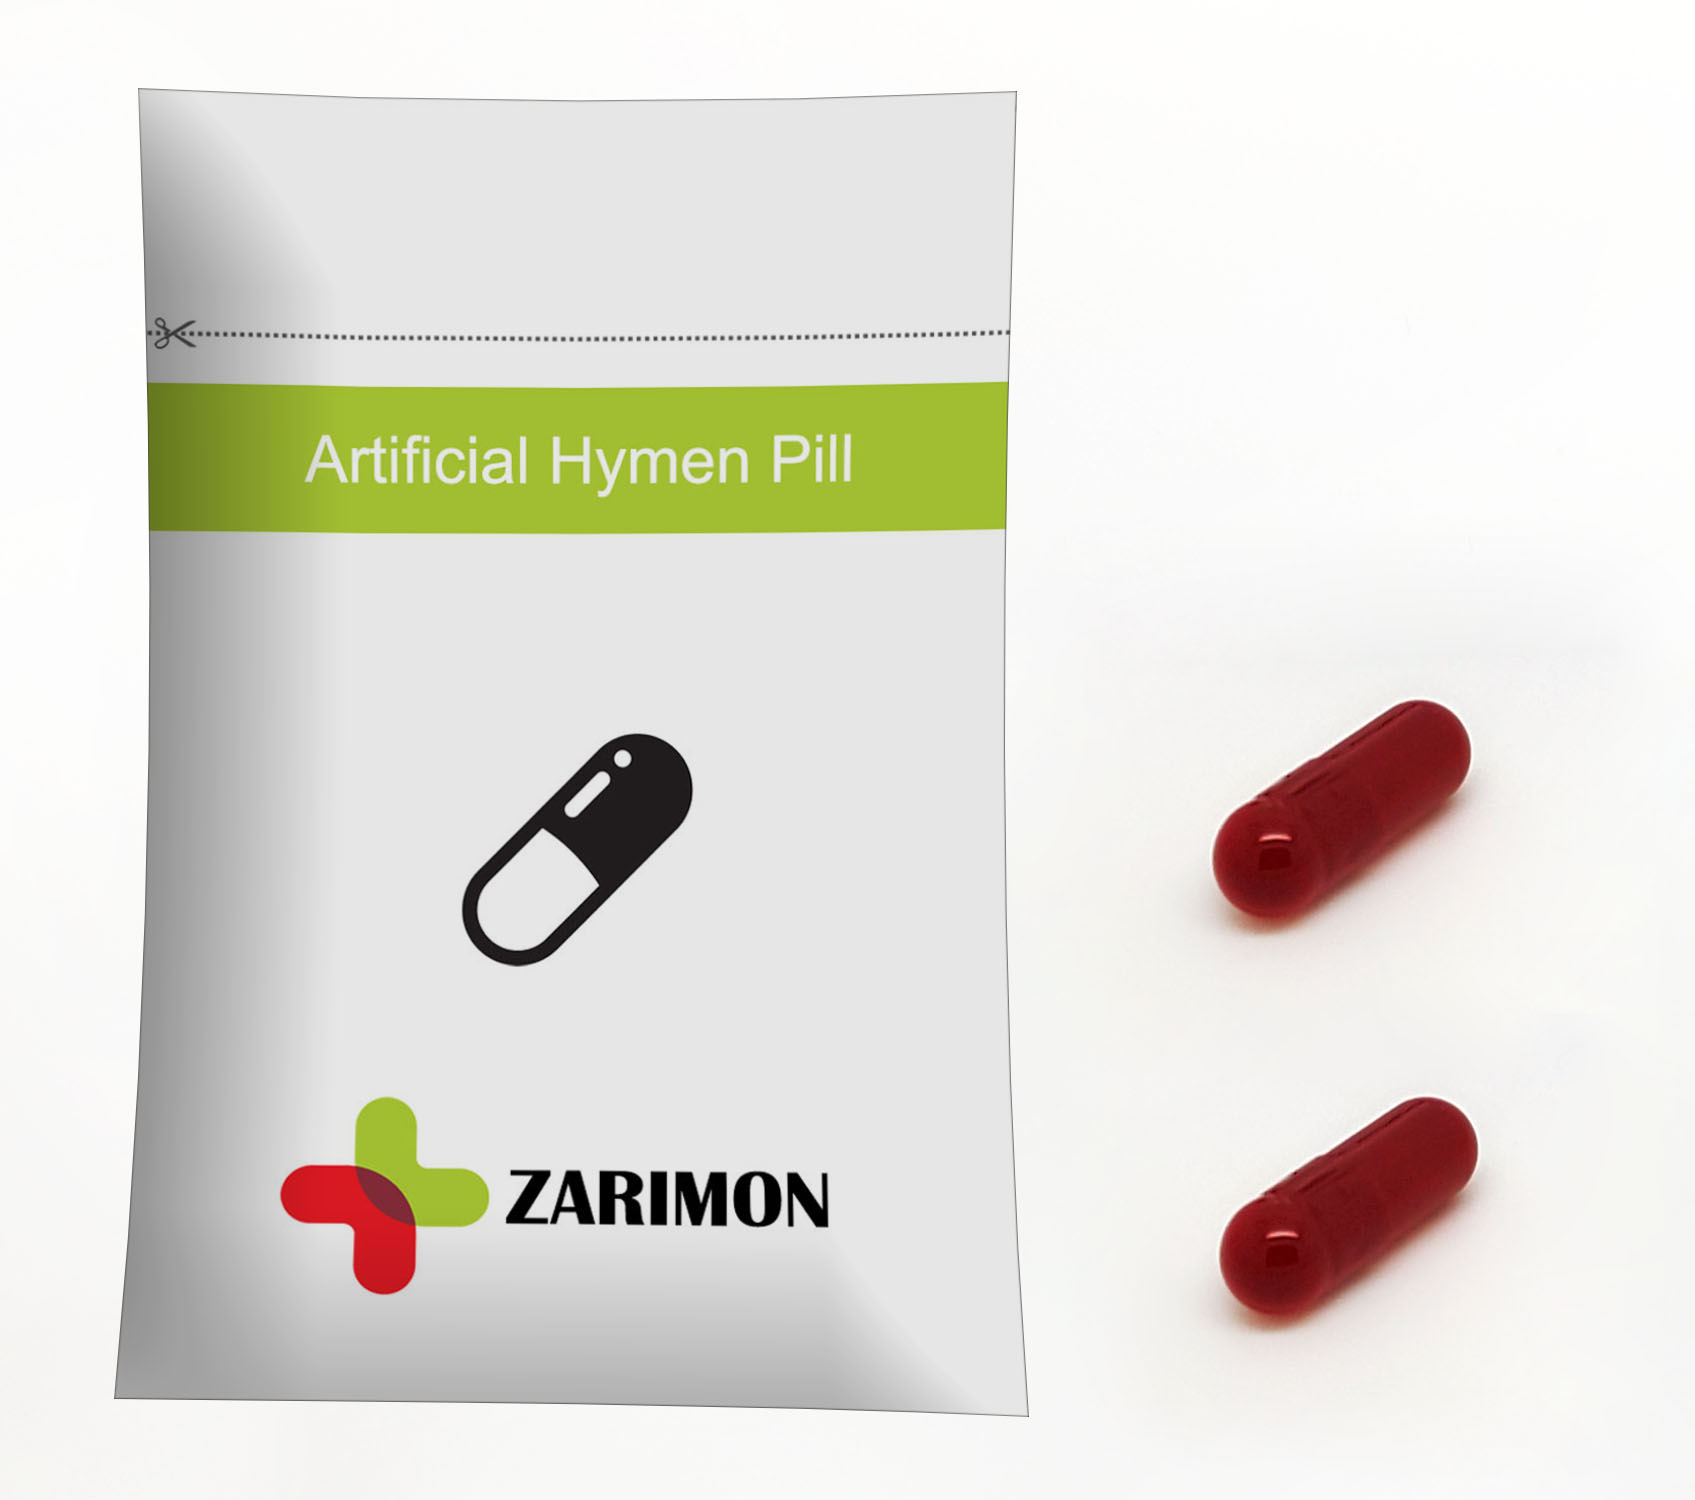 artificial hymen pill (2017_08_14 12_33_10 UTC)